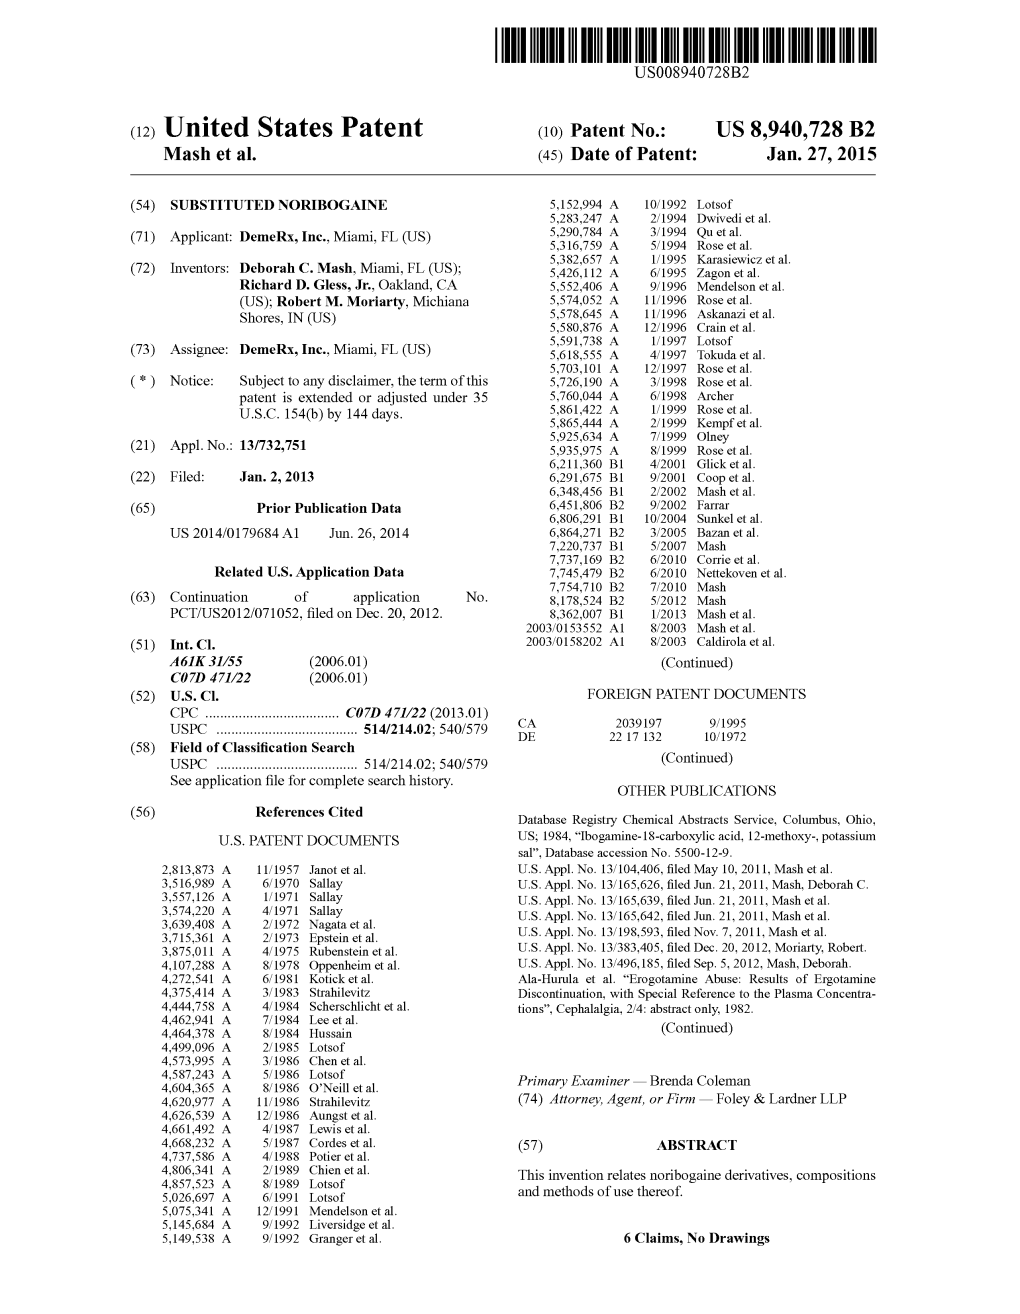 (12) United States Patent (10) Patent No.: US 8,940,728 B2